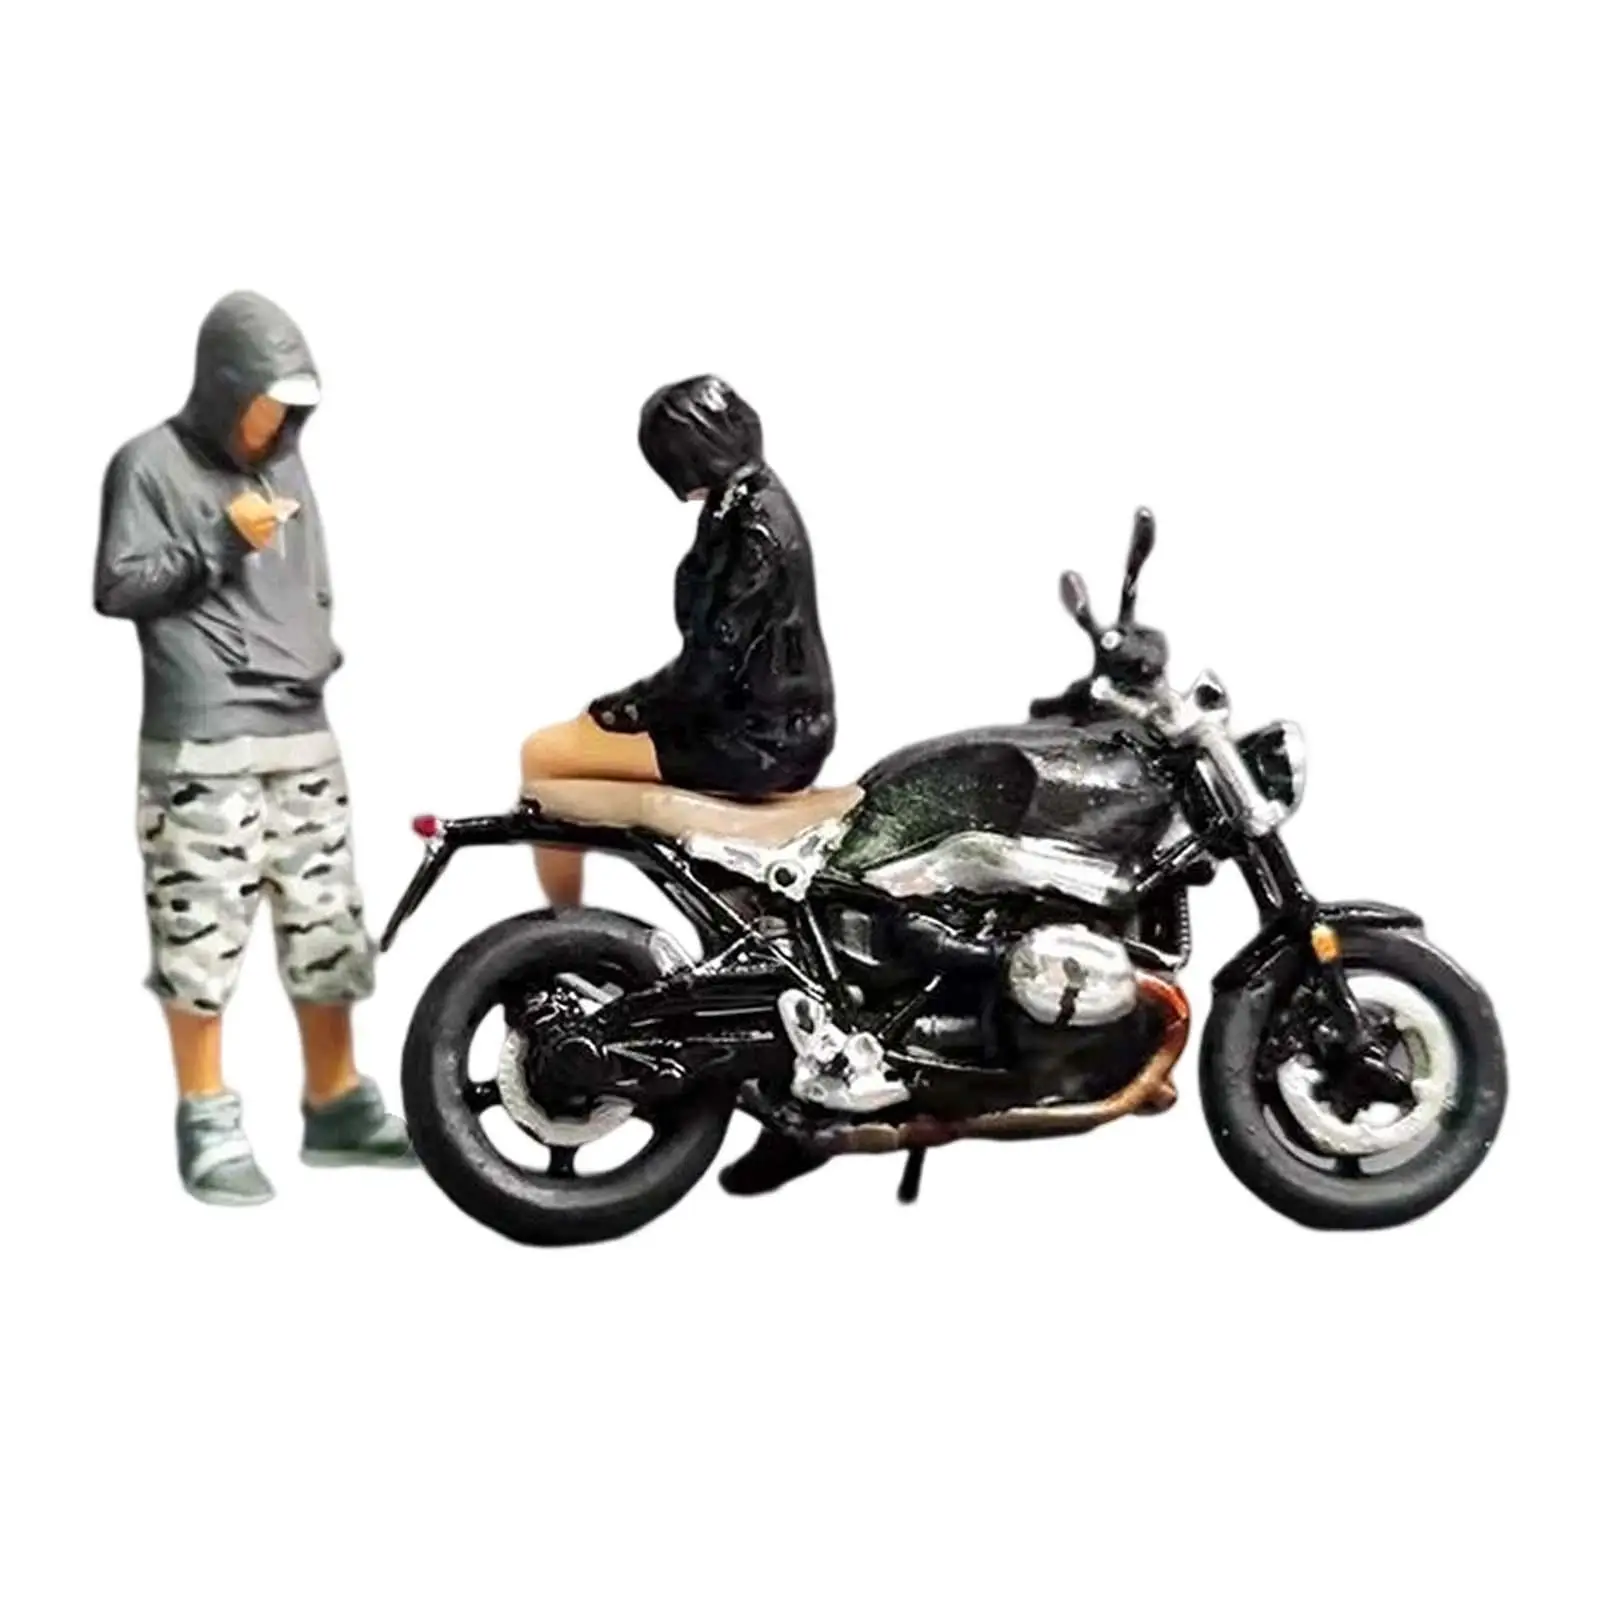 1/64 Figures Motorcycle Micro Landscape Street Scene Diorama Scenery Layout